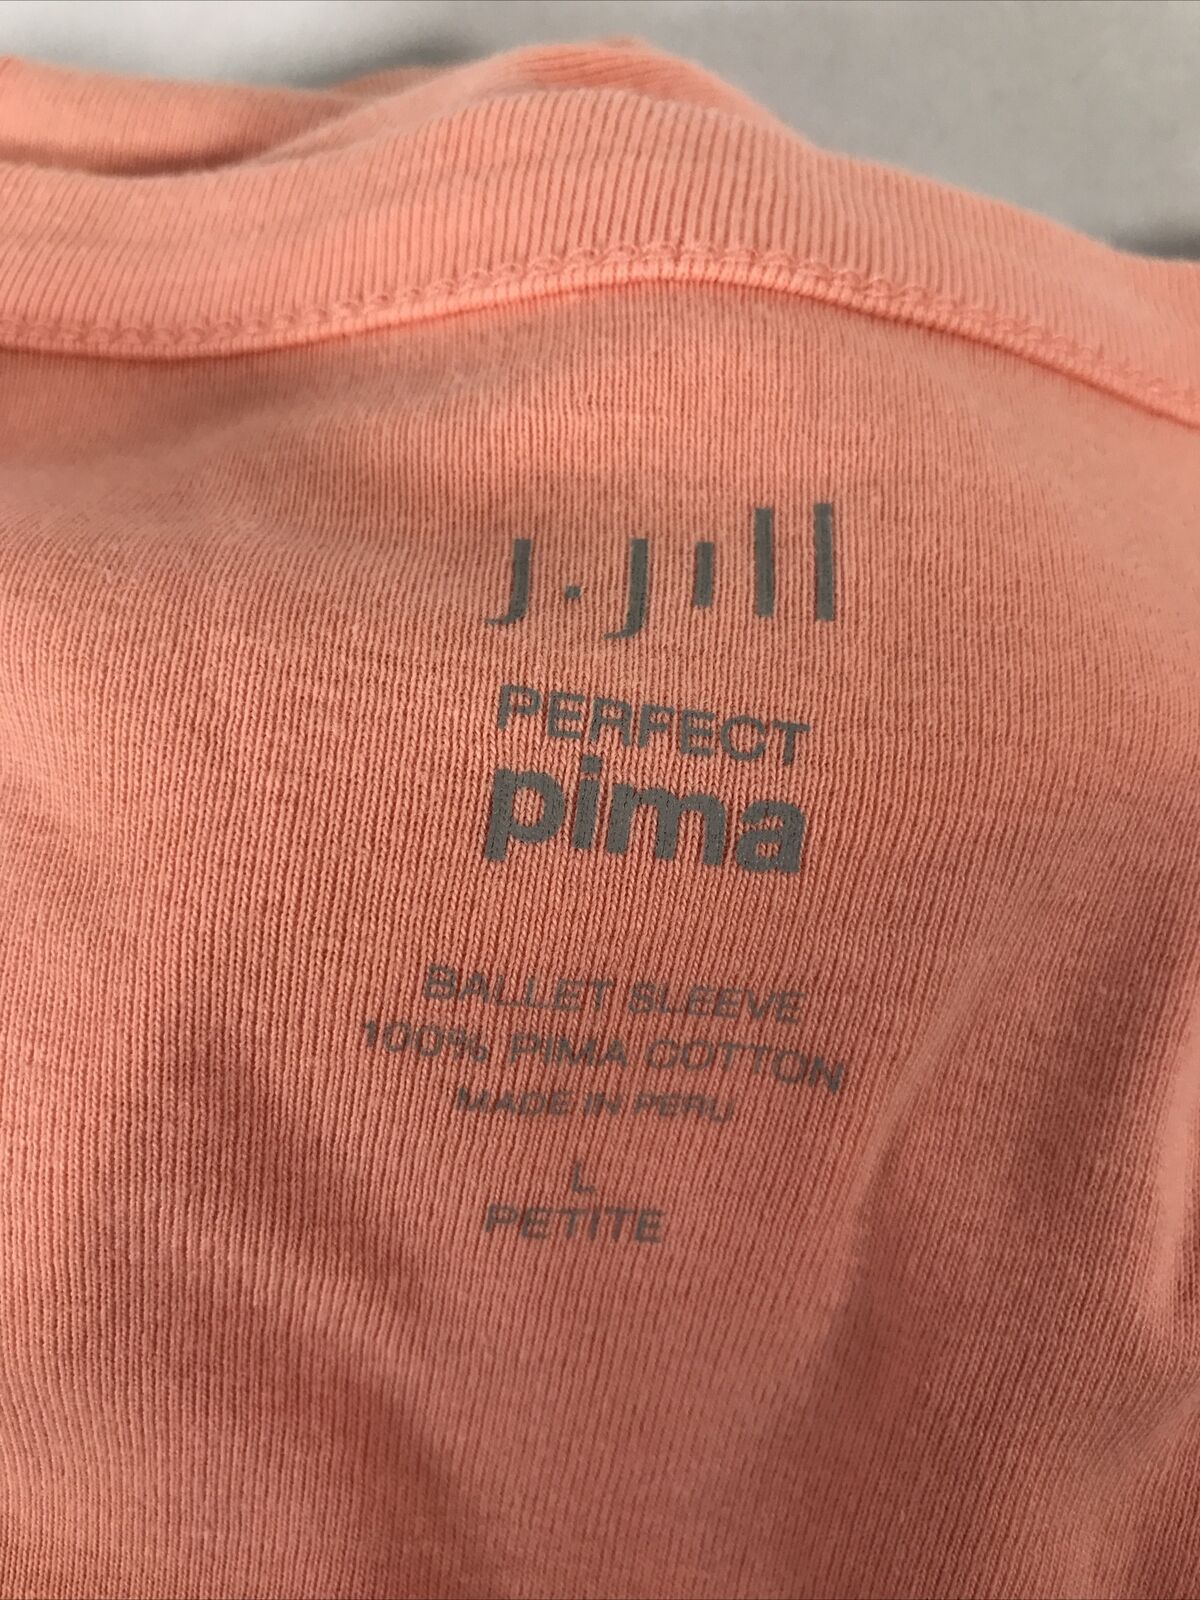 J.Jill Women's Orange Perfect Pima Ballet Sleeve T-Shirt Sz L Petite